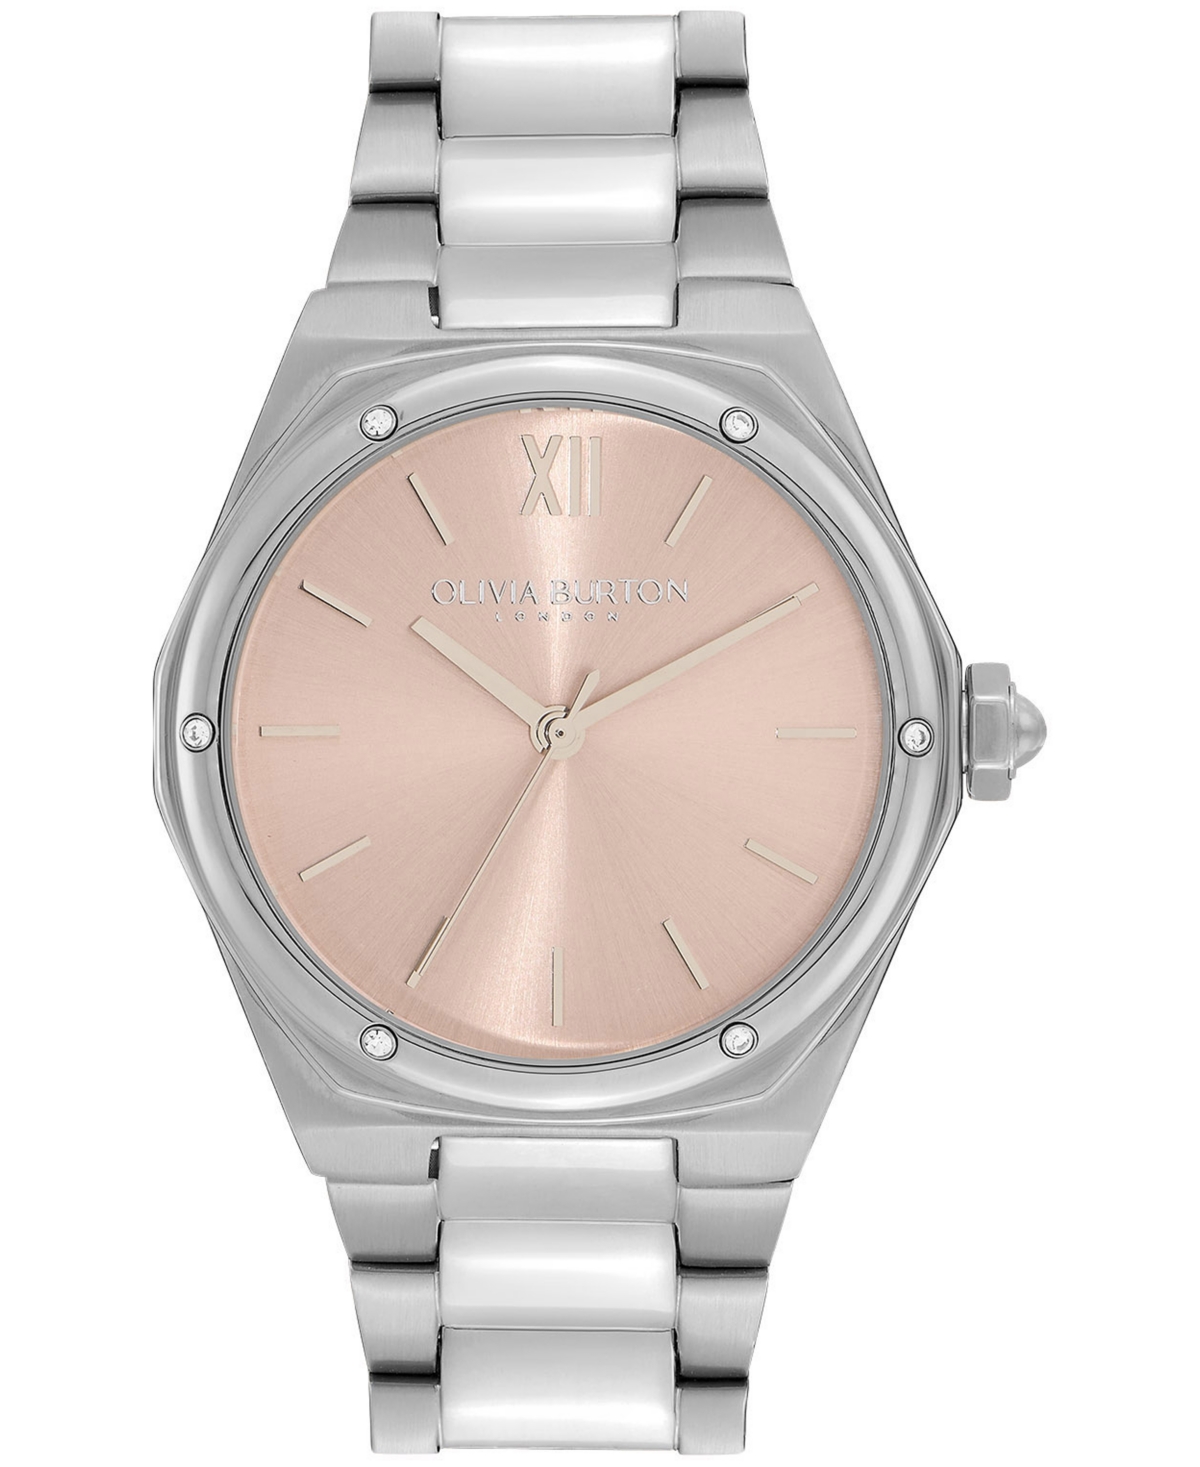 Women's Sports Luxe Hexa Silver-Tone Stainless Steel Watch 33mm - Stainless Steel